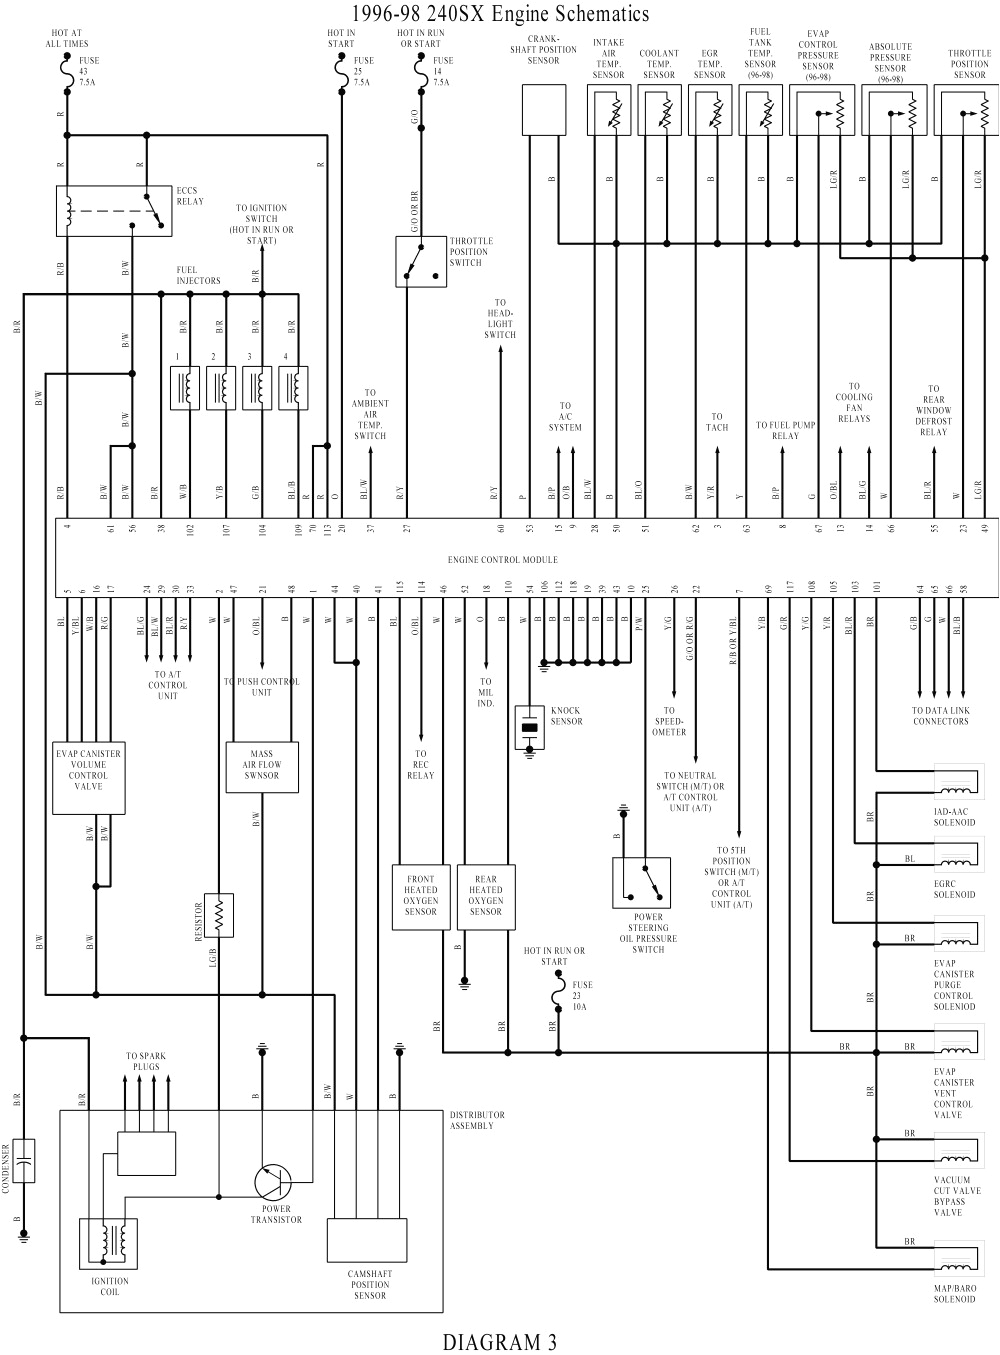 wire diagram on a 97 nissan 240 wiring diagram paper engine wiring diagram 1996 nissan 240sx